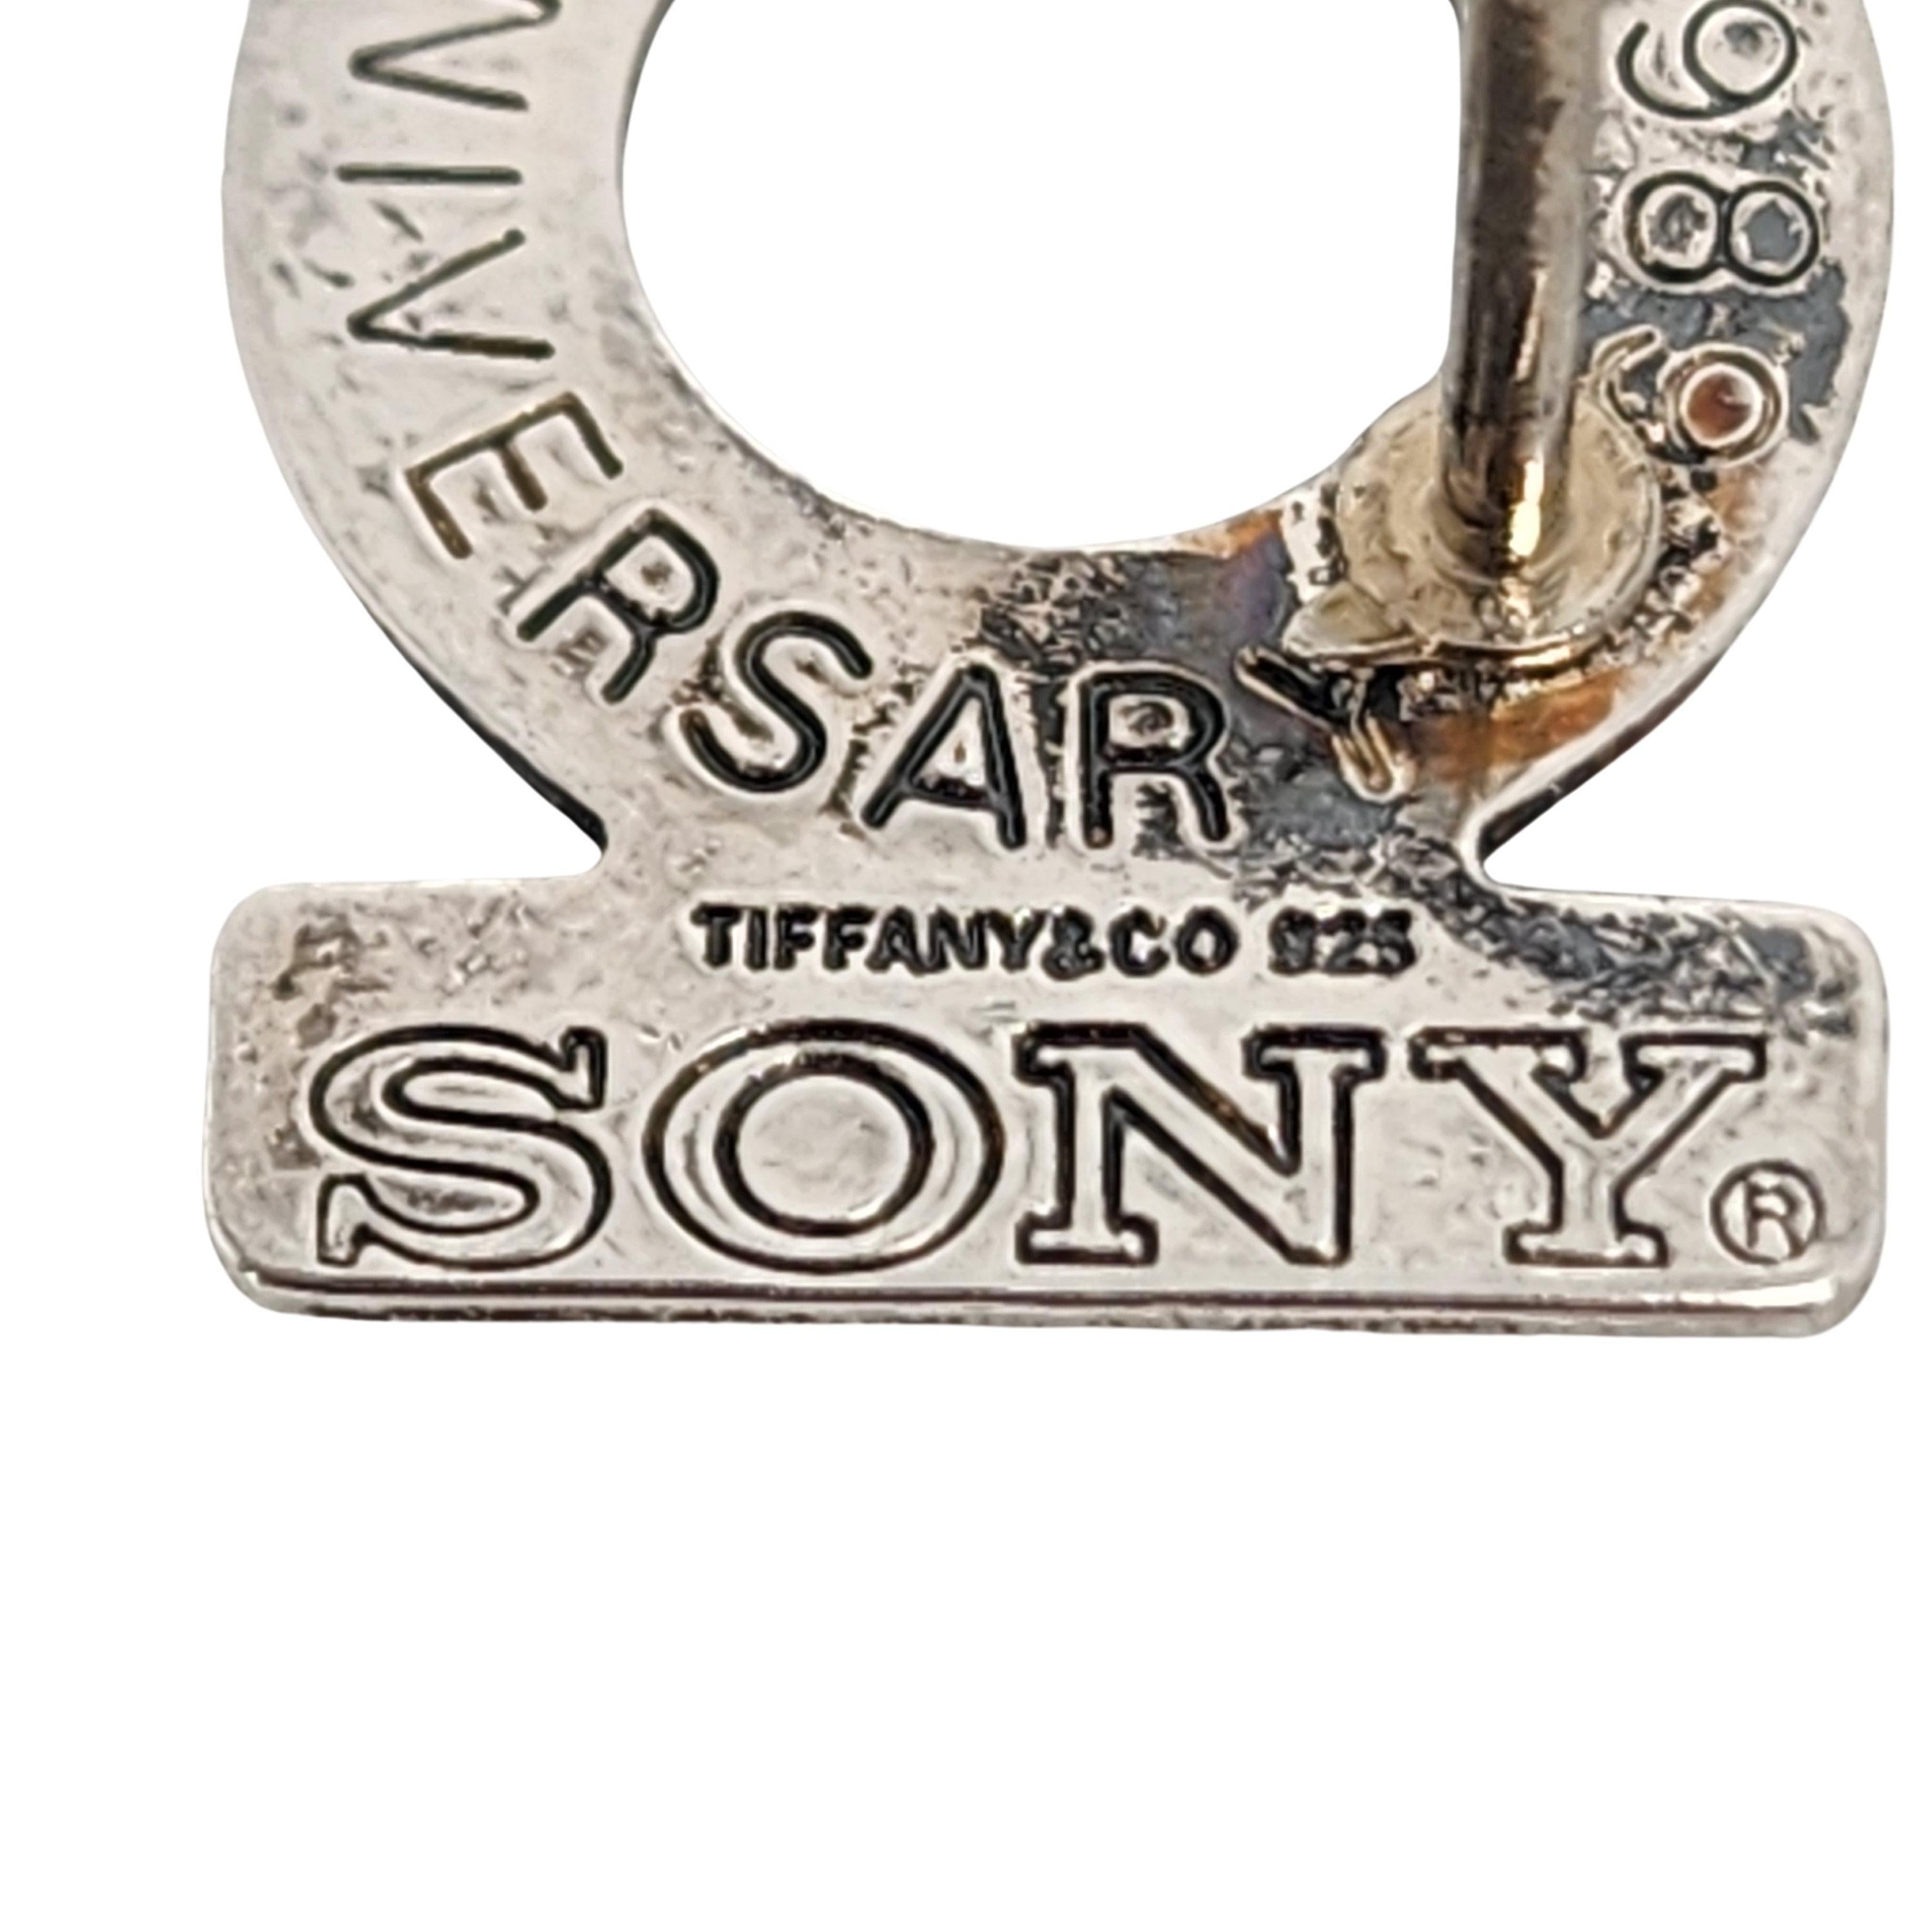 Tiffany & Co Sterling Silver Sony Walkman 10th Anniversary Tie Tack Pin #16312 1